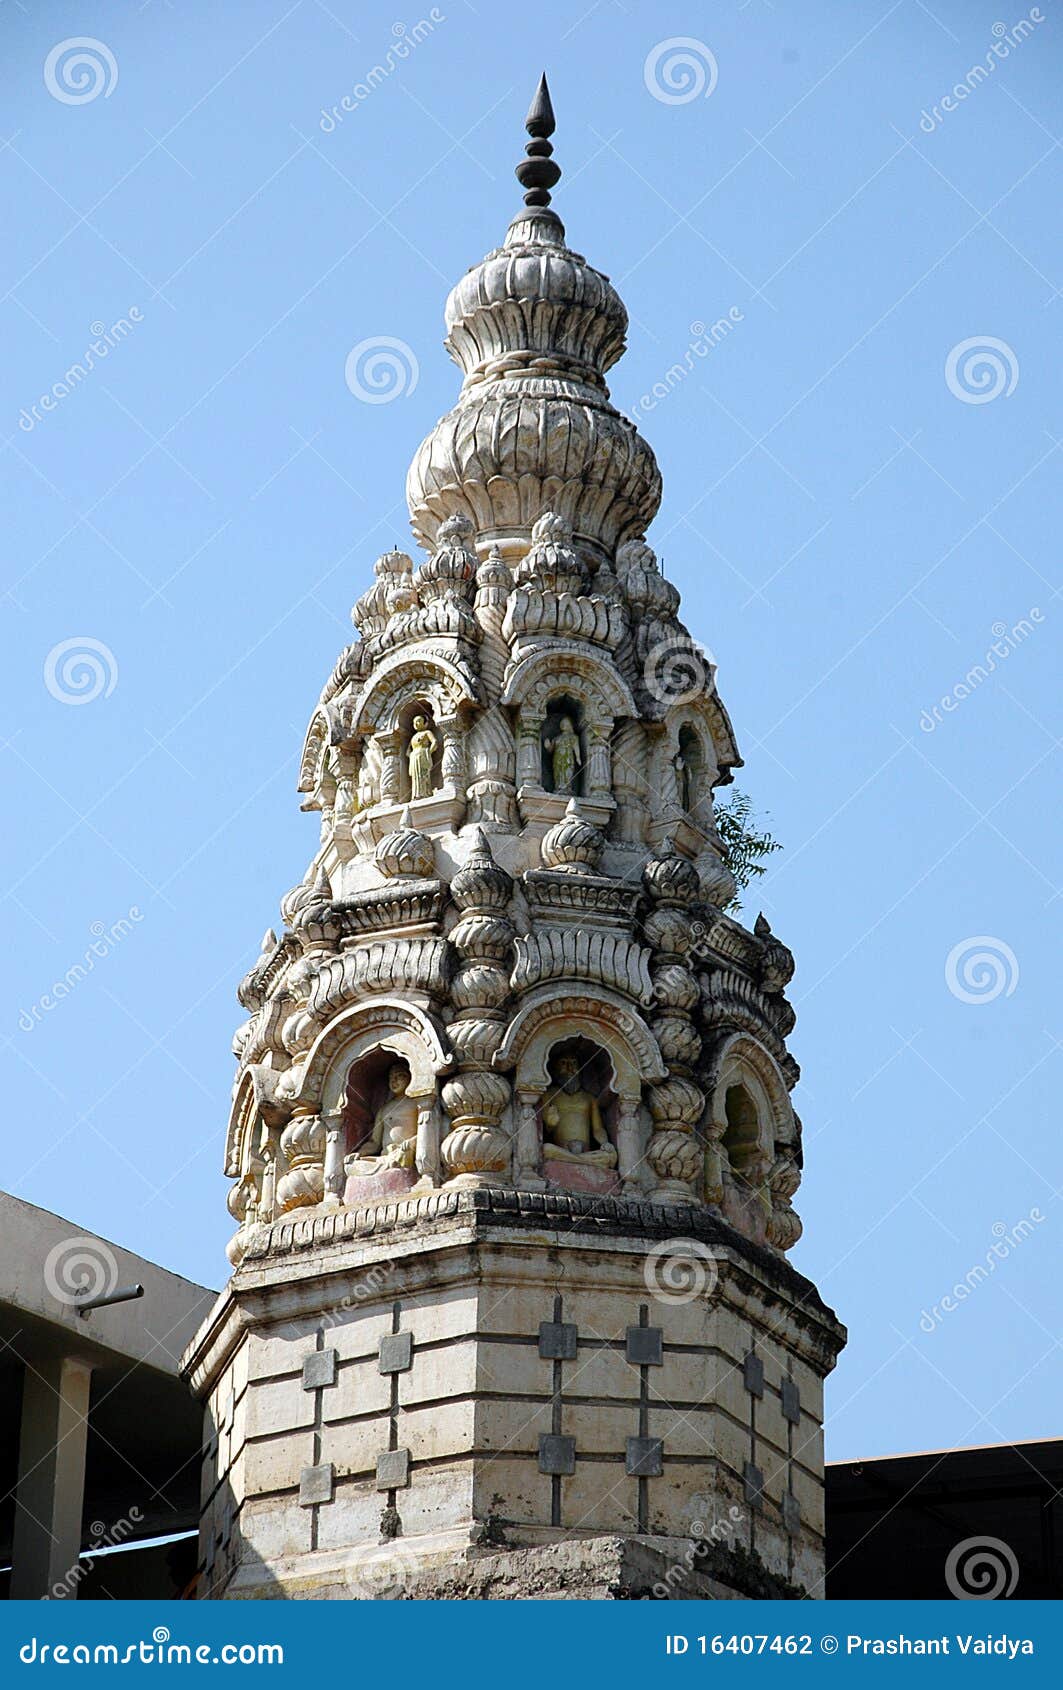 ornate temple spire